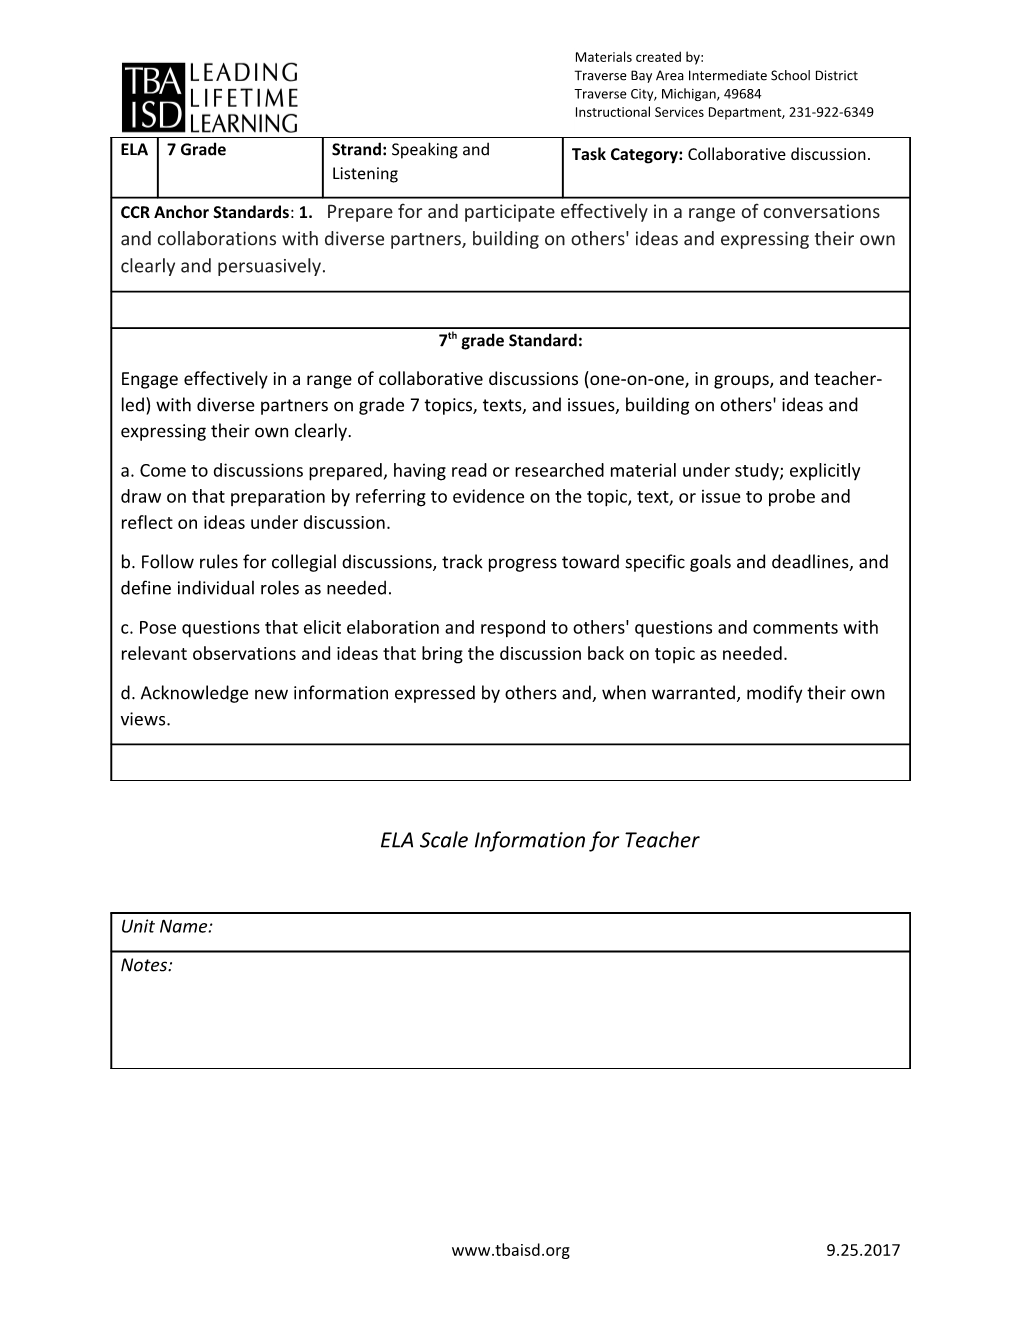 ELA Scale Information for Teacher